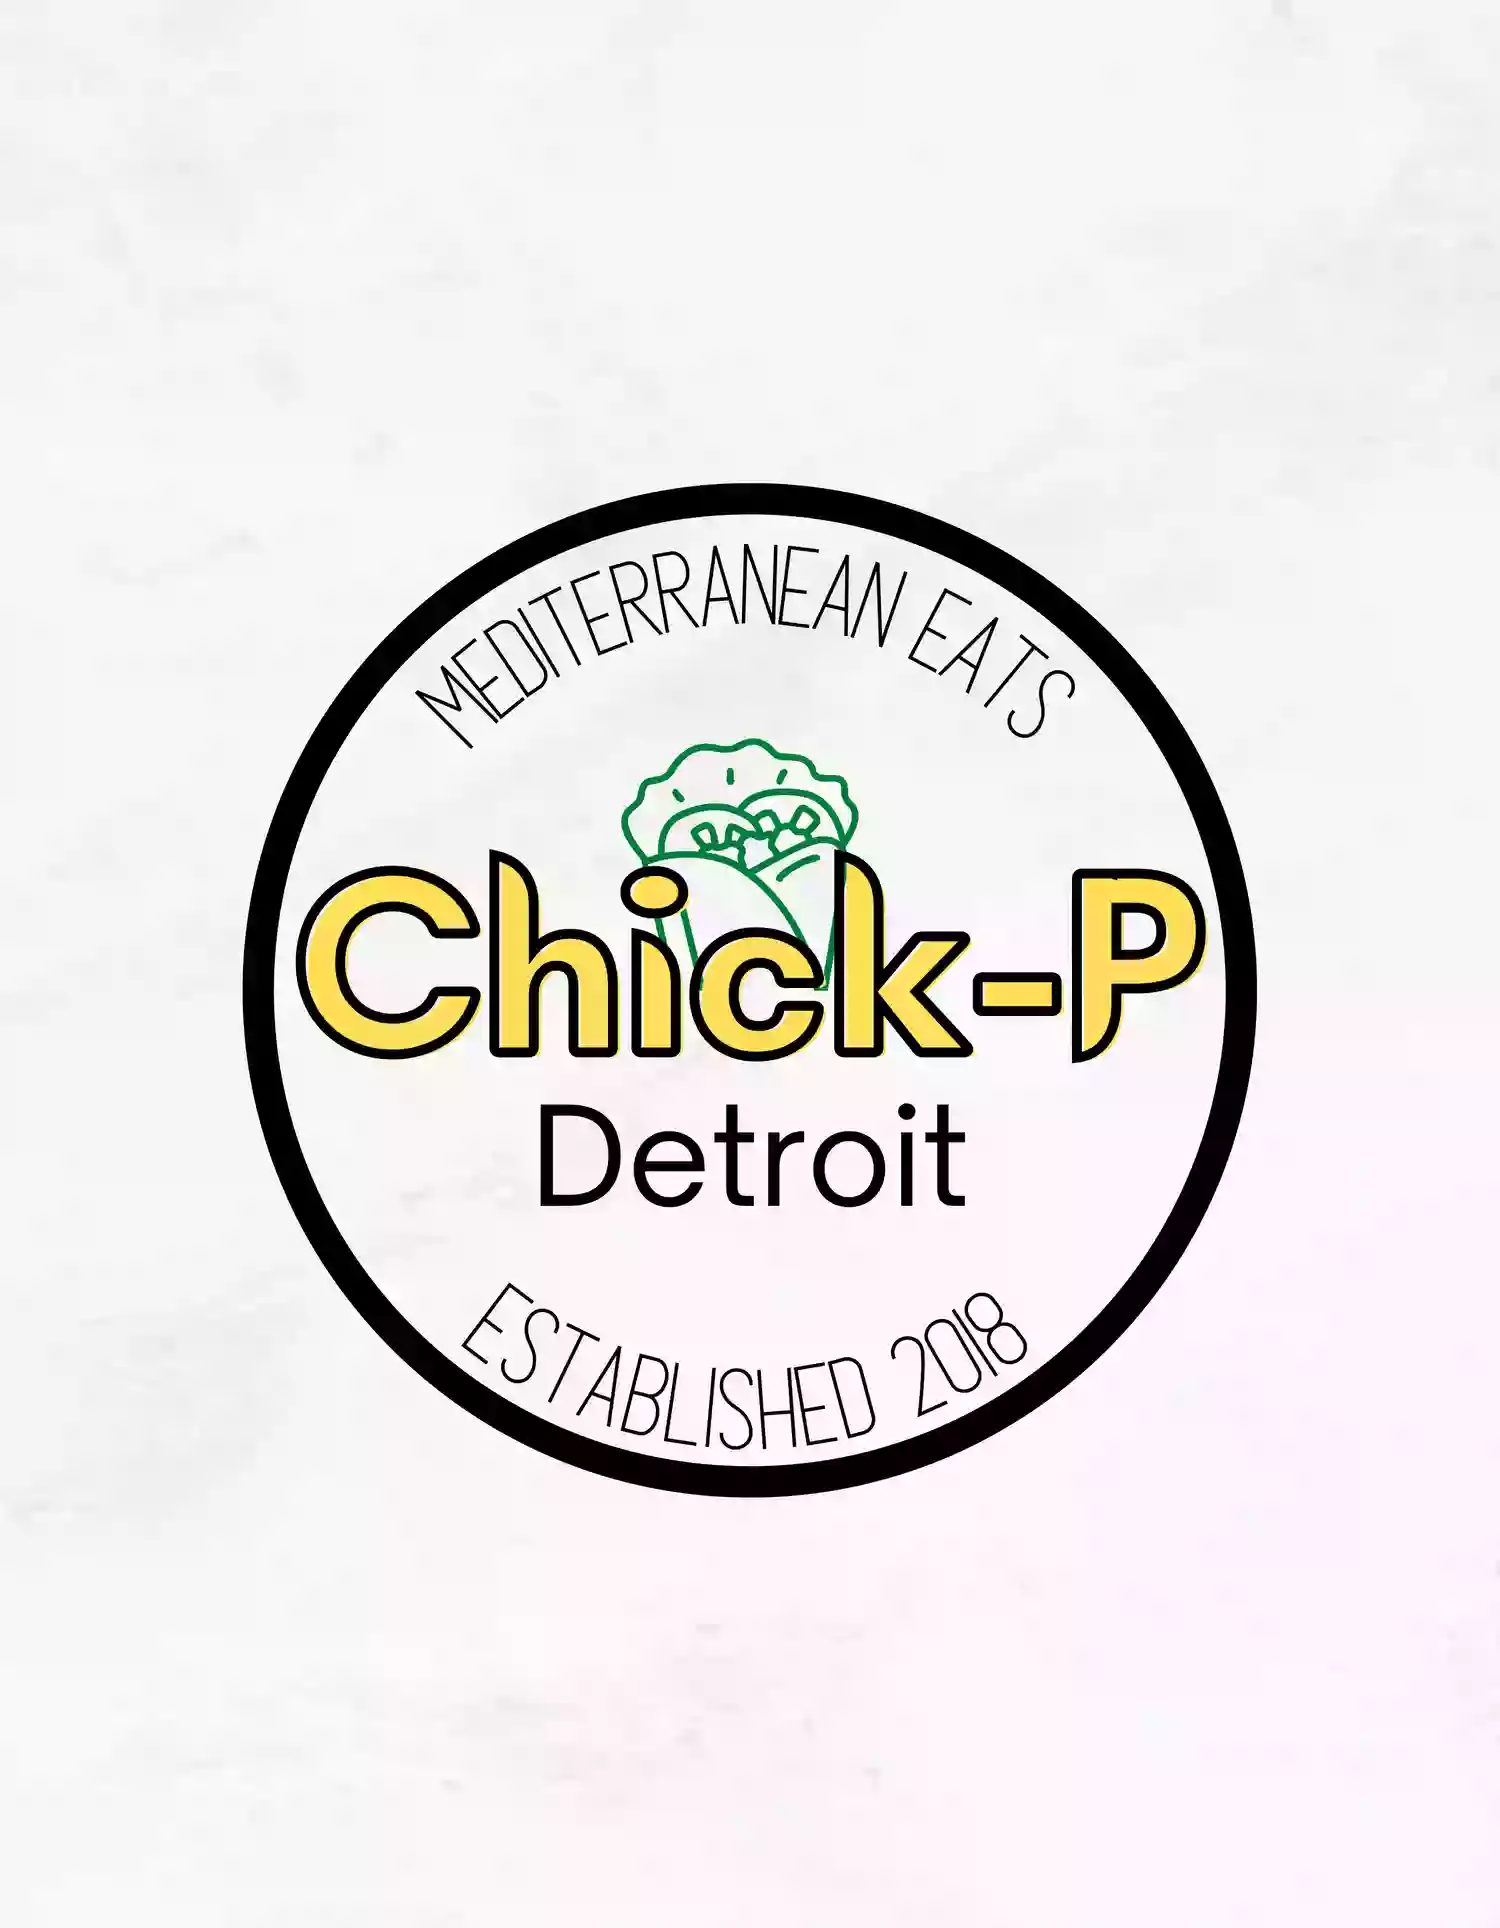 Chickp Detroit